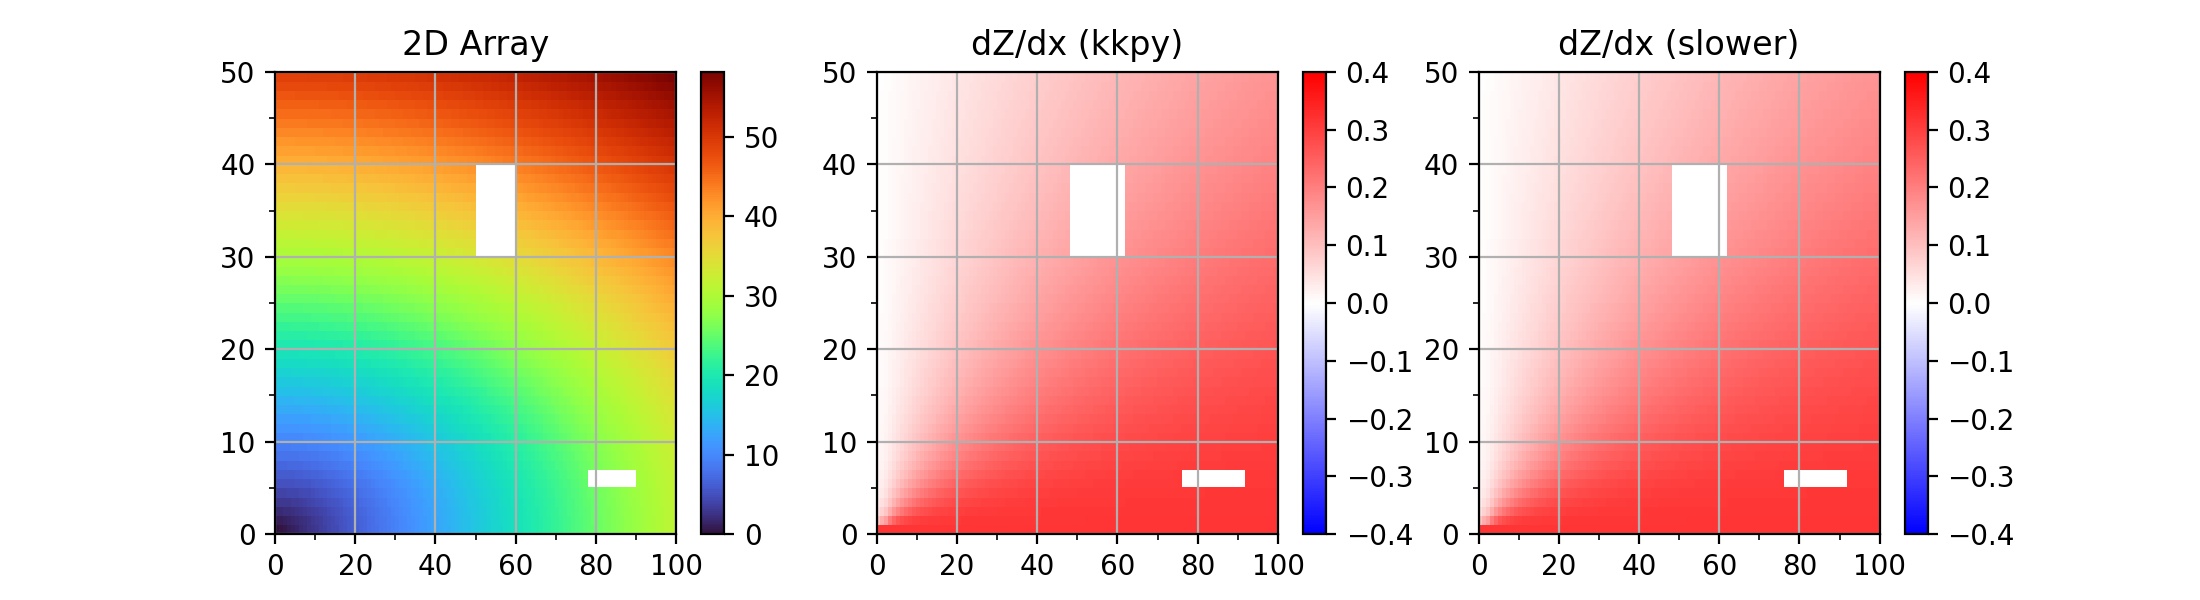 2D Array, dZ/dx (kkpy), dZ/dx (slower)